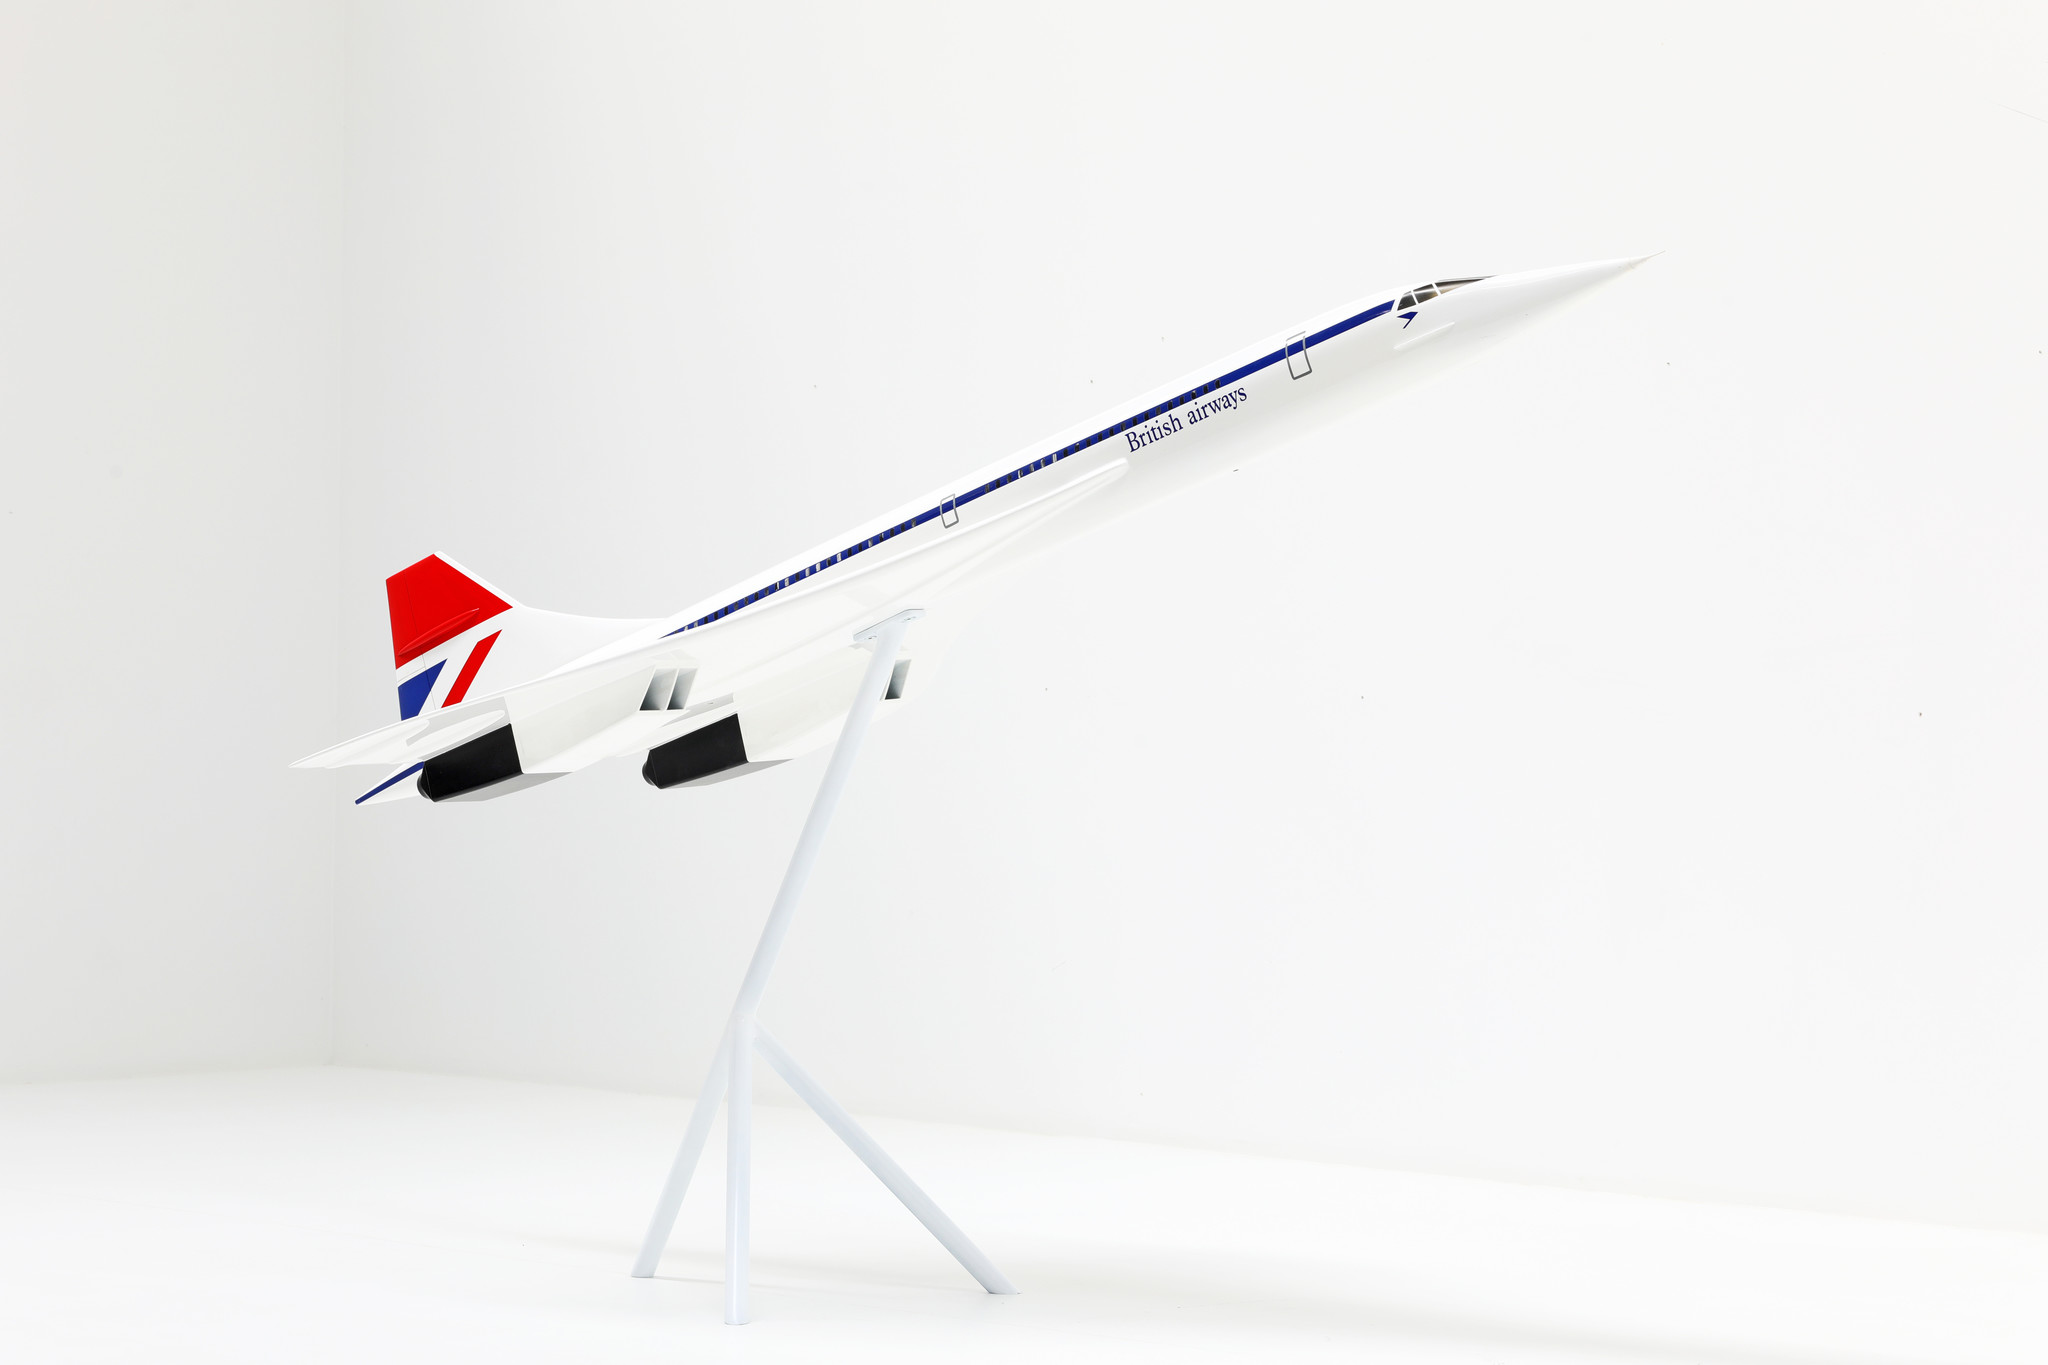 XXL Concorde scale model 1/24, 1990's